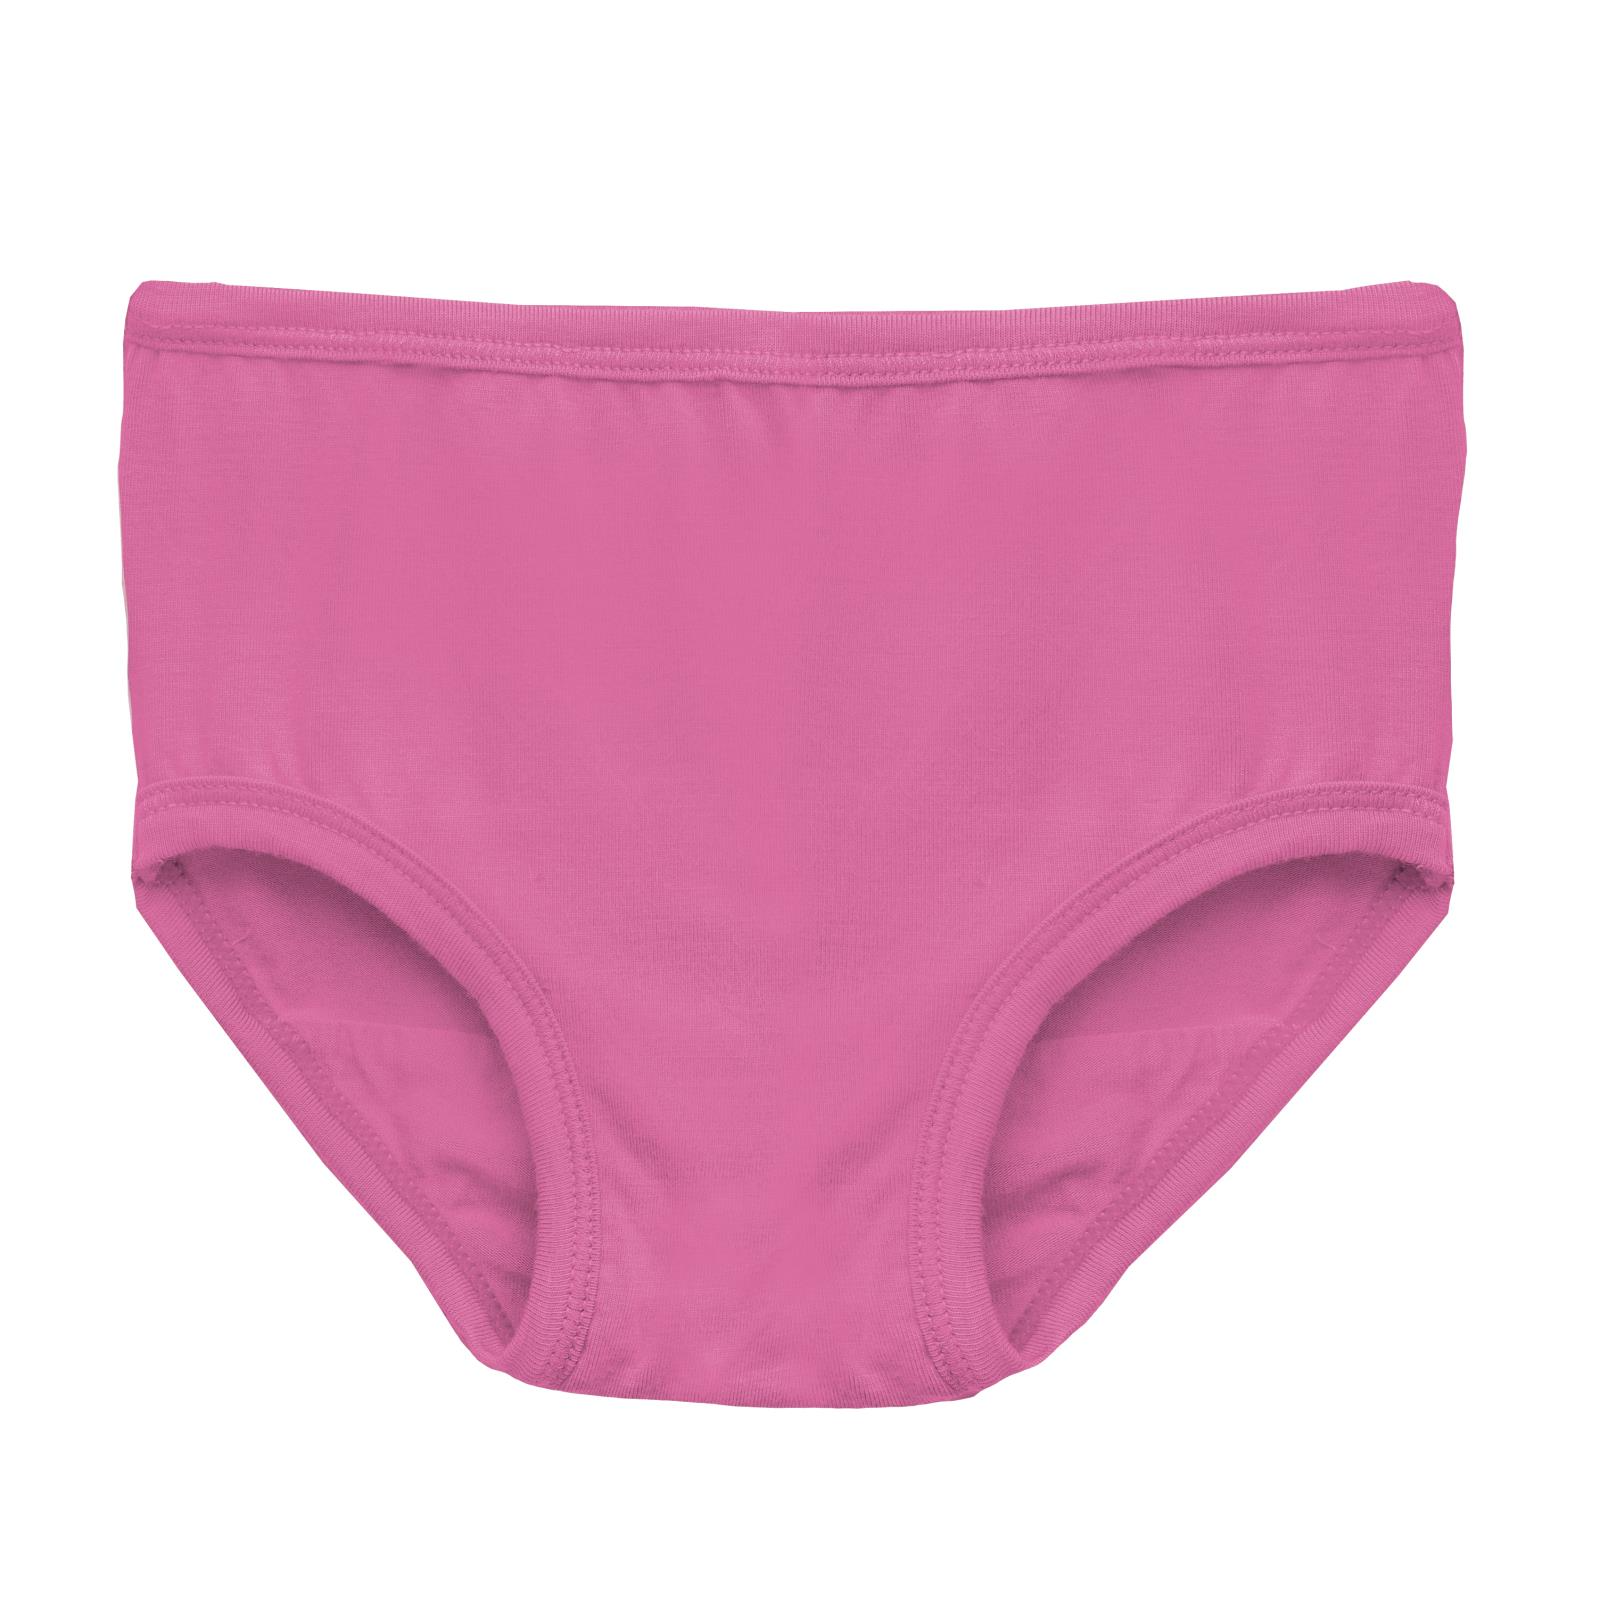 Kickee Pants Print Girl's Underwear Set of 3 (Tulip Scales/Tulip/Little Bo Peep)